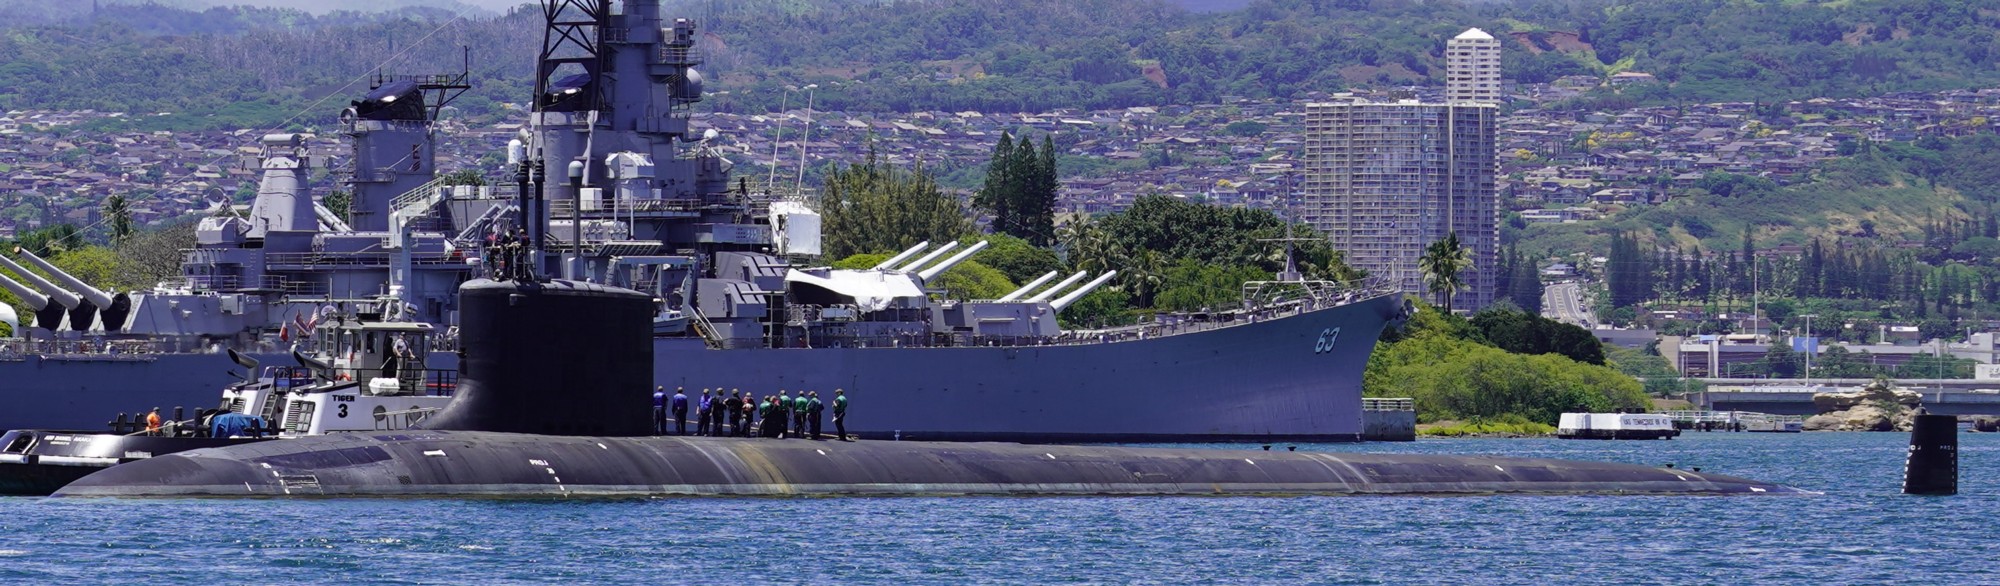 ssn-780 uss missouri virginia class attack submarine us navy 57